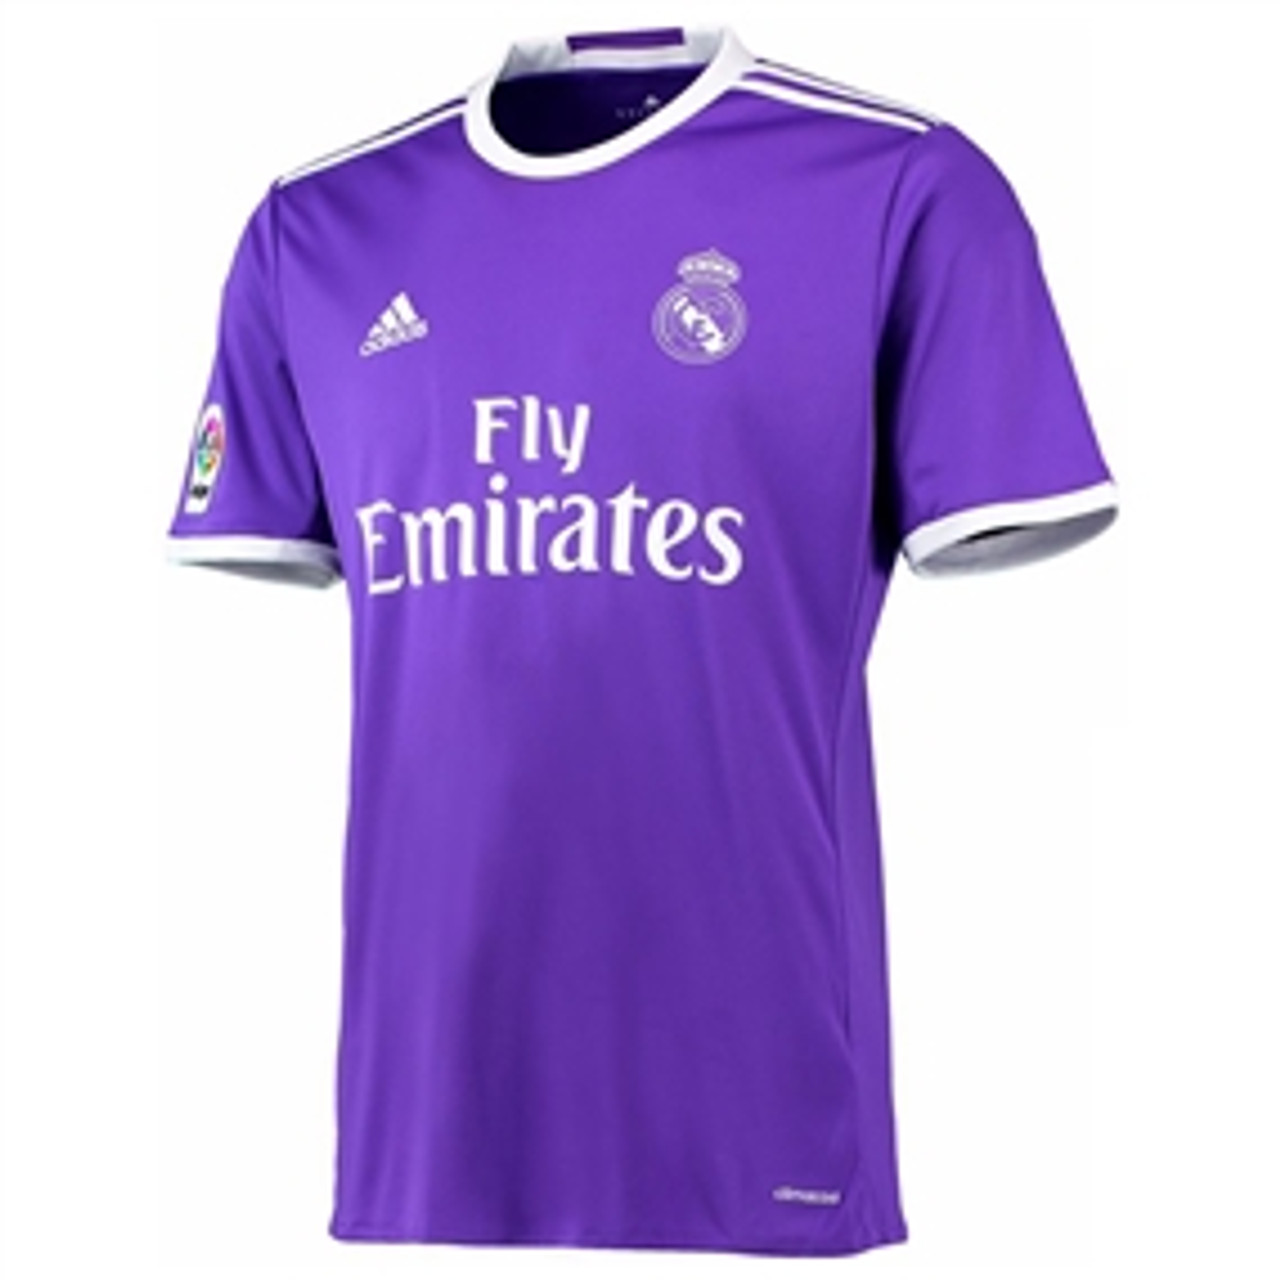 purple adidas soccer jersey